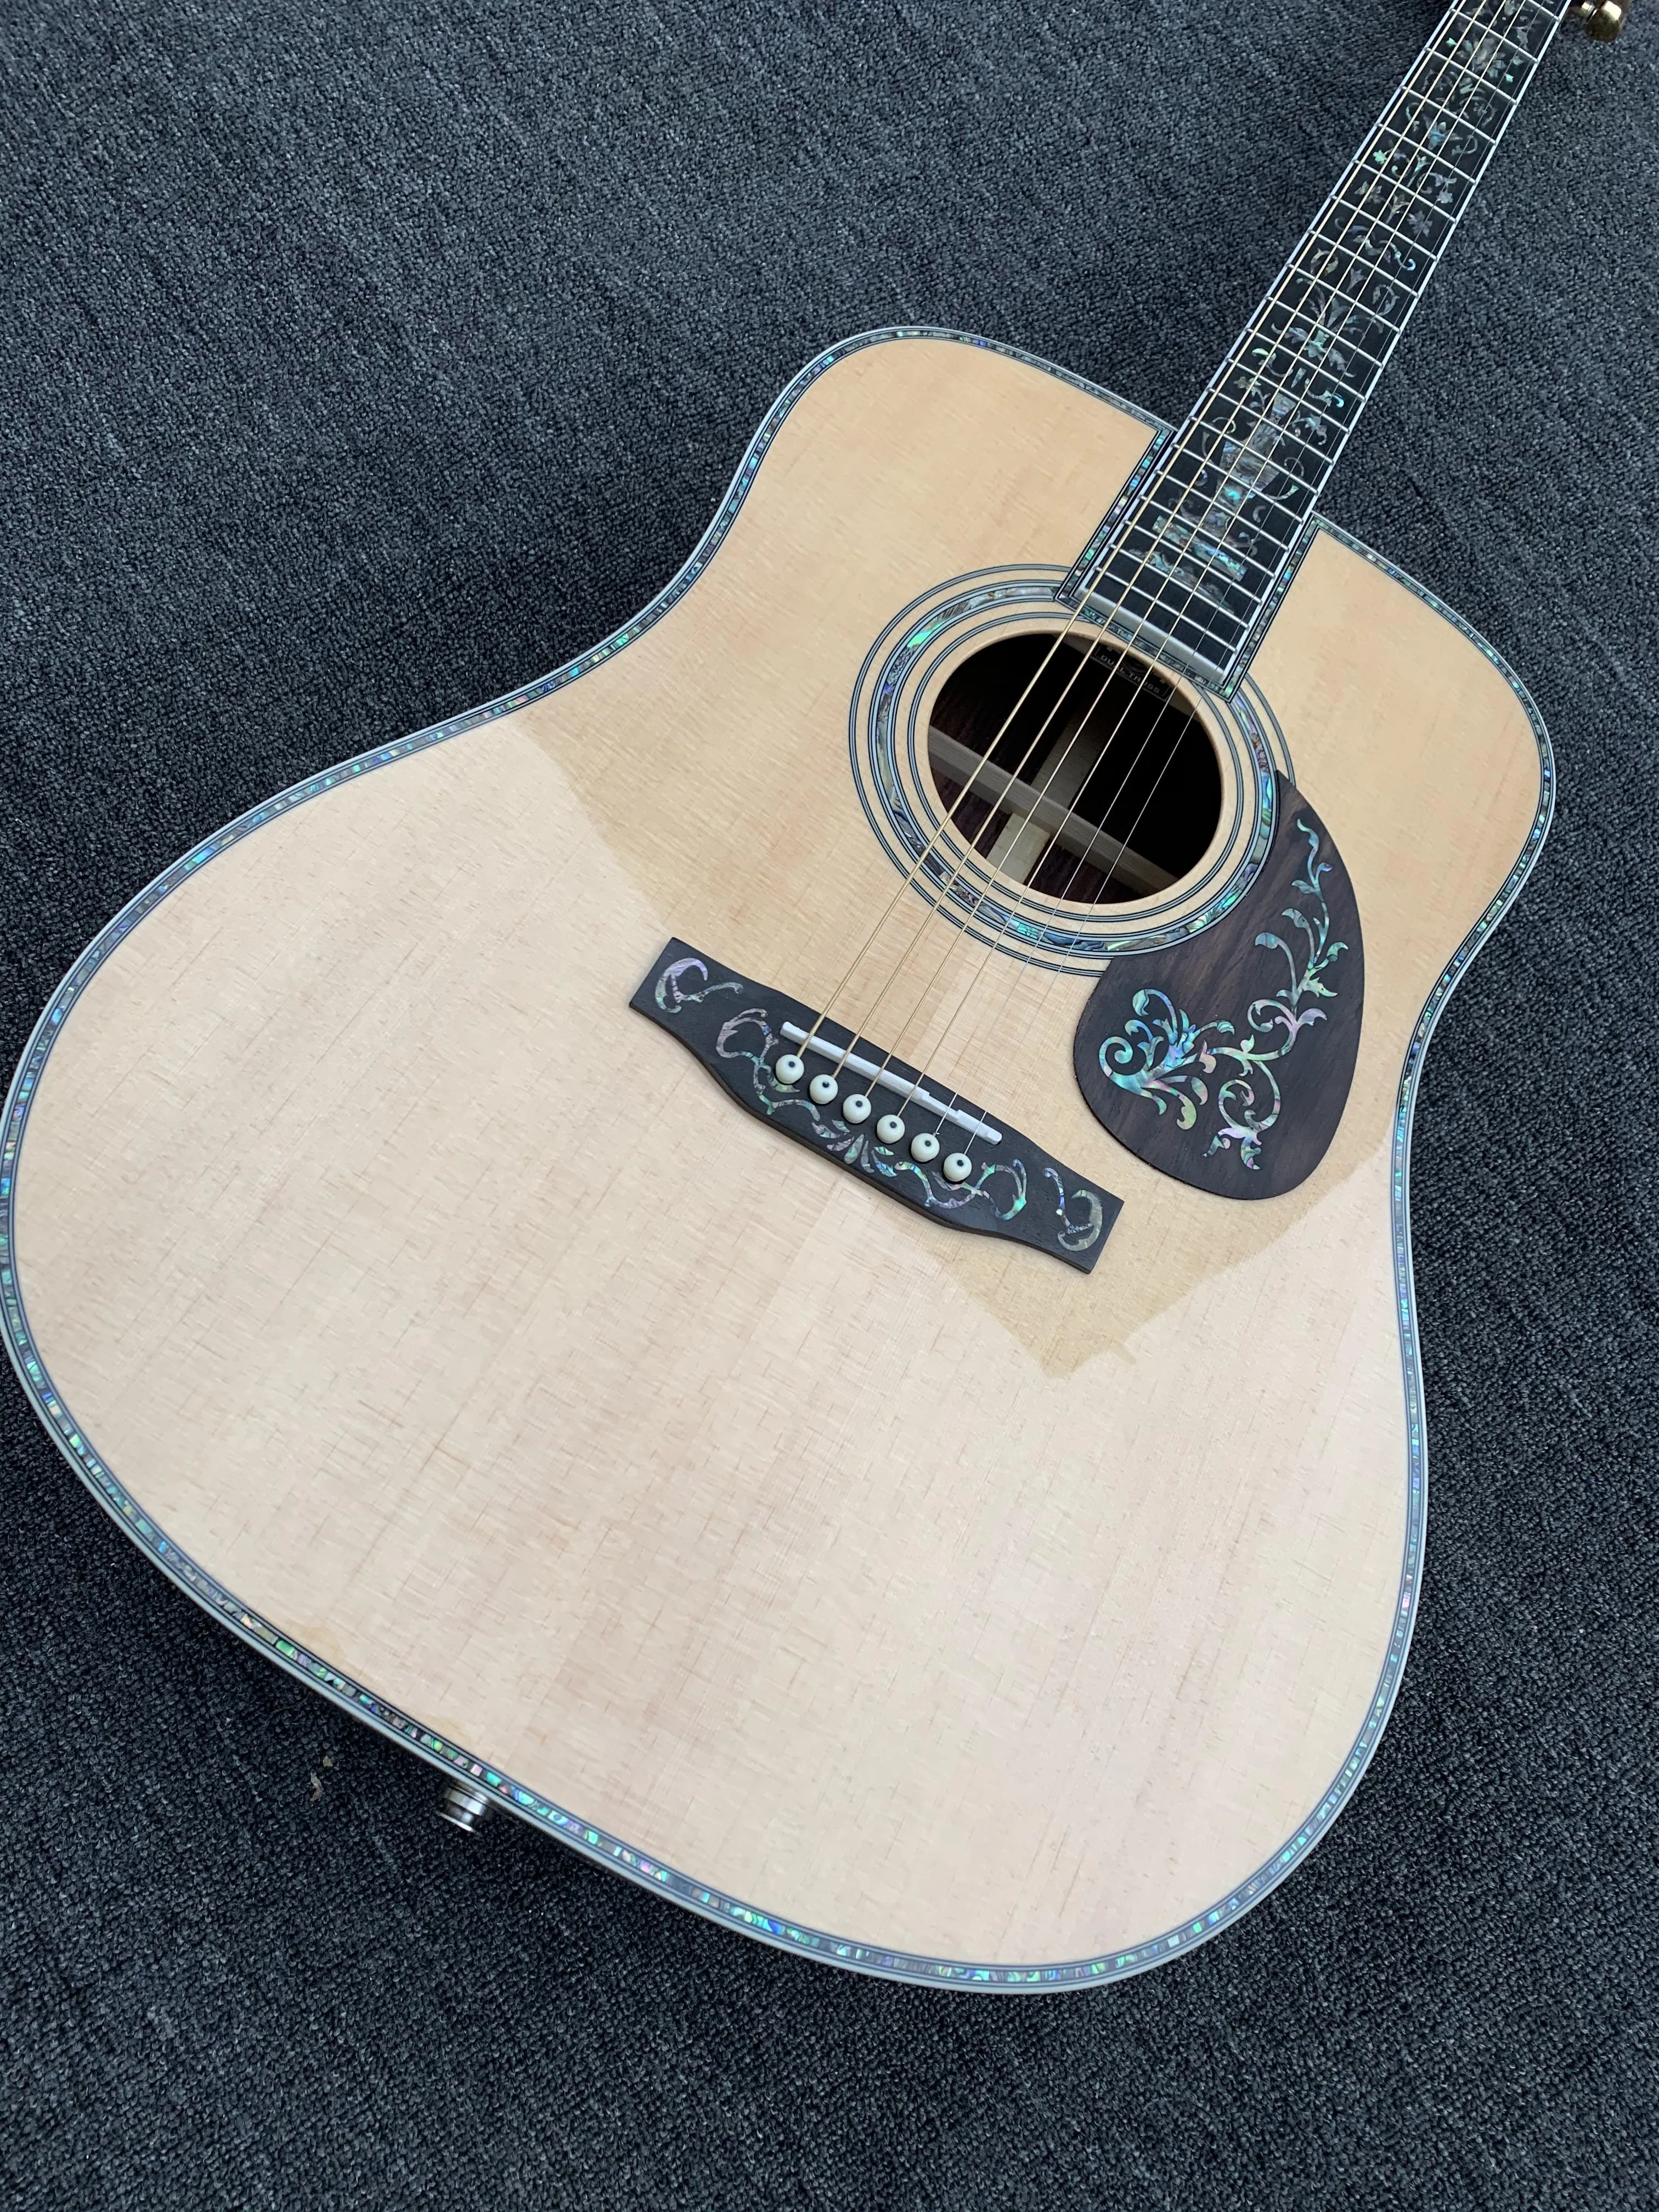 2022 New 41インチLuxury Acoustic Acoustic Guitar + Eq。トウヒのベニヤローズウッドの側面と背面、黒檀の指板アワビの貝殻。